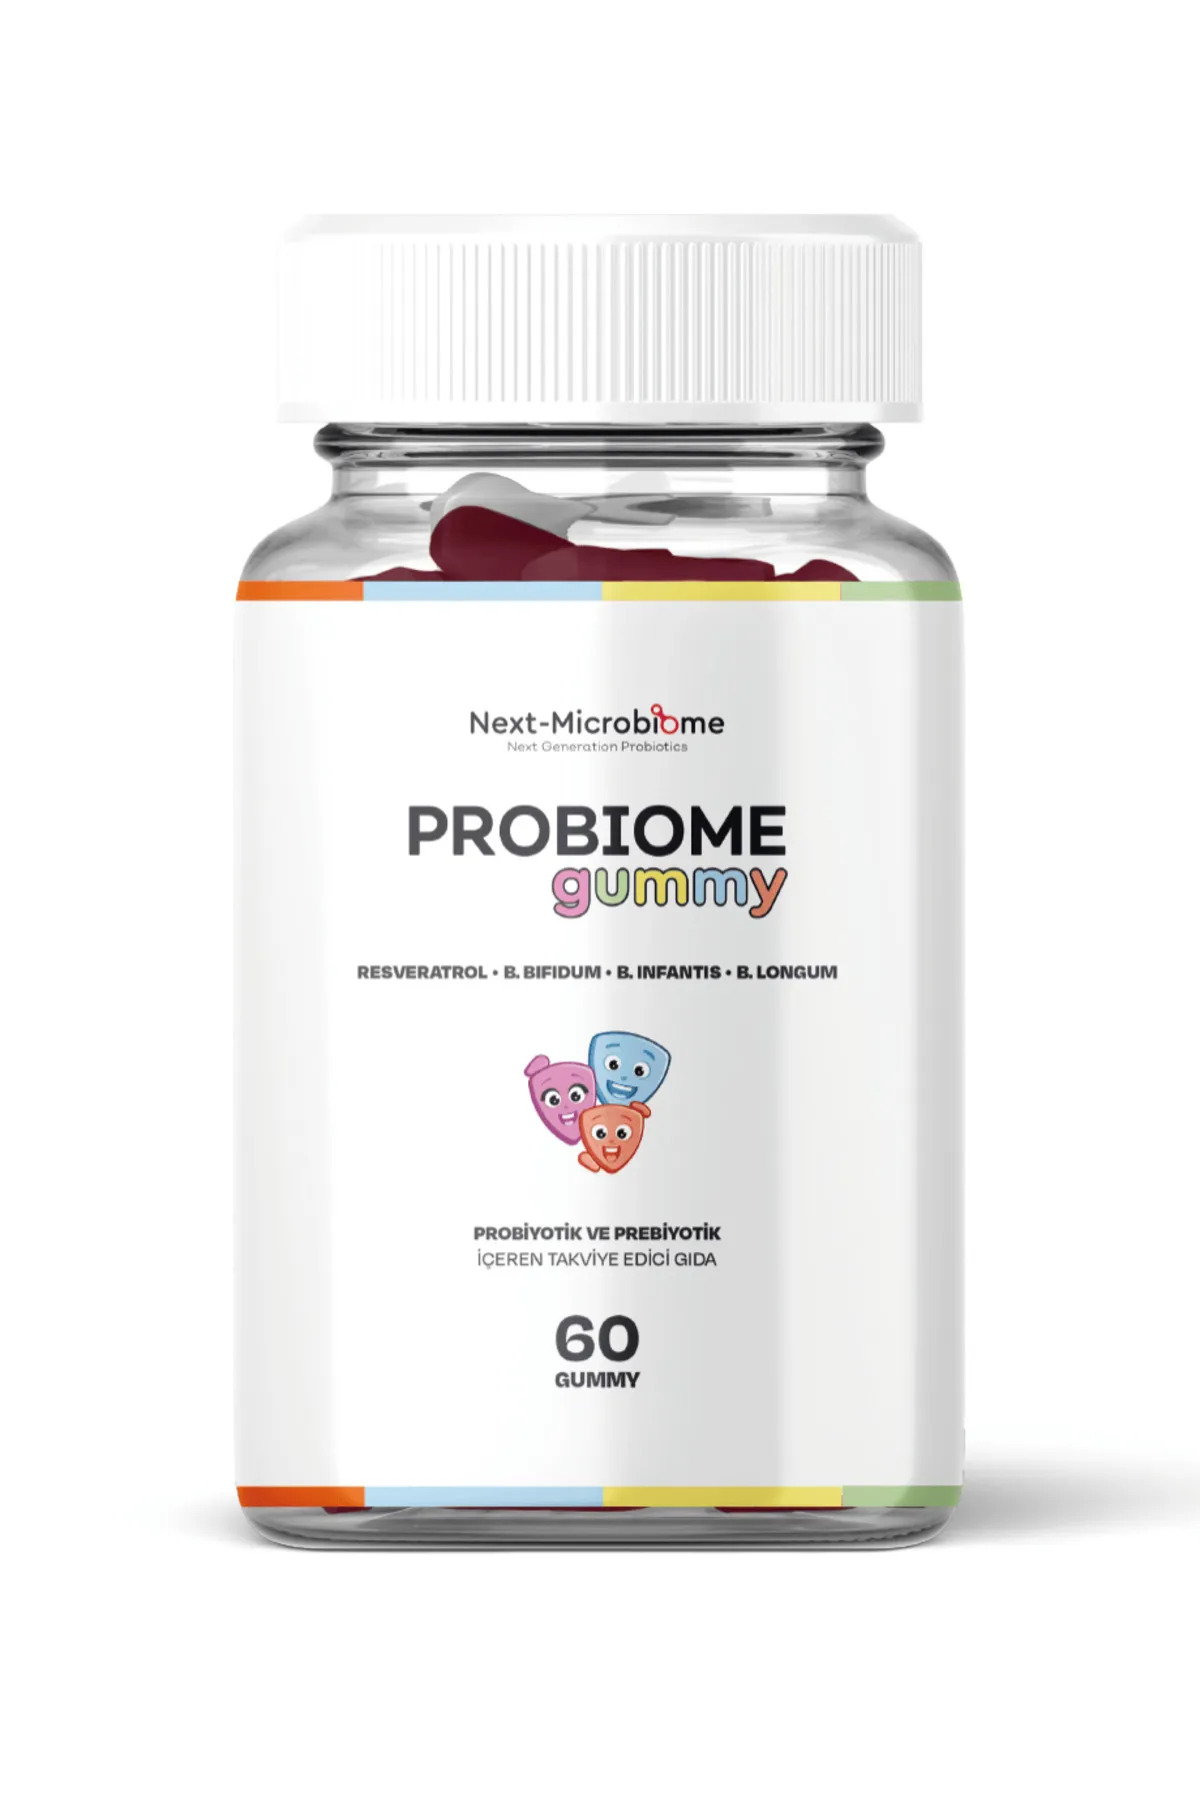 Probiome-Gummy Probiyotik ve Prebiyotik